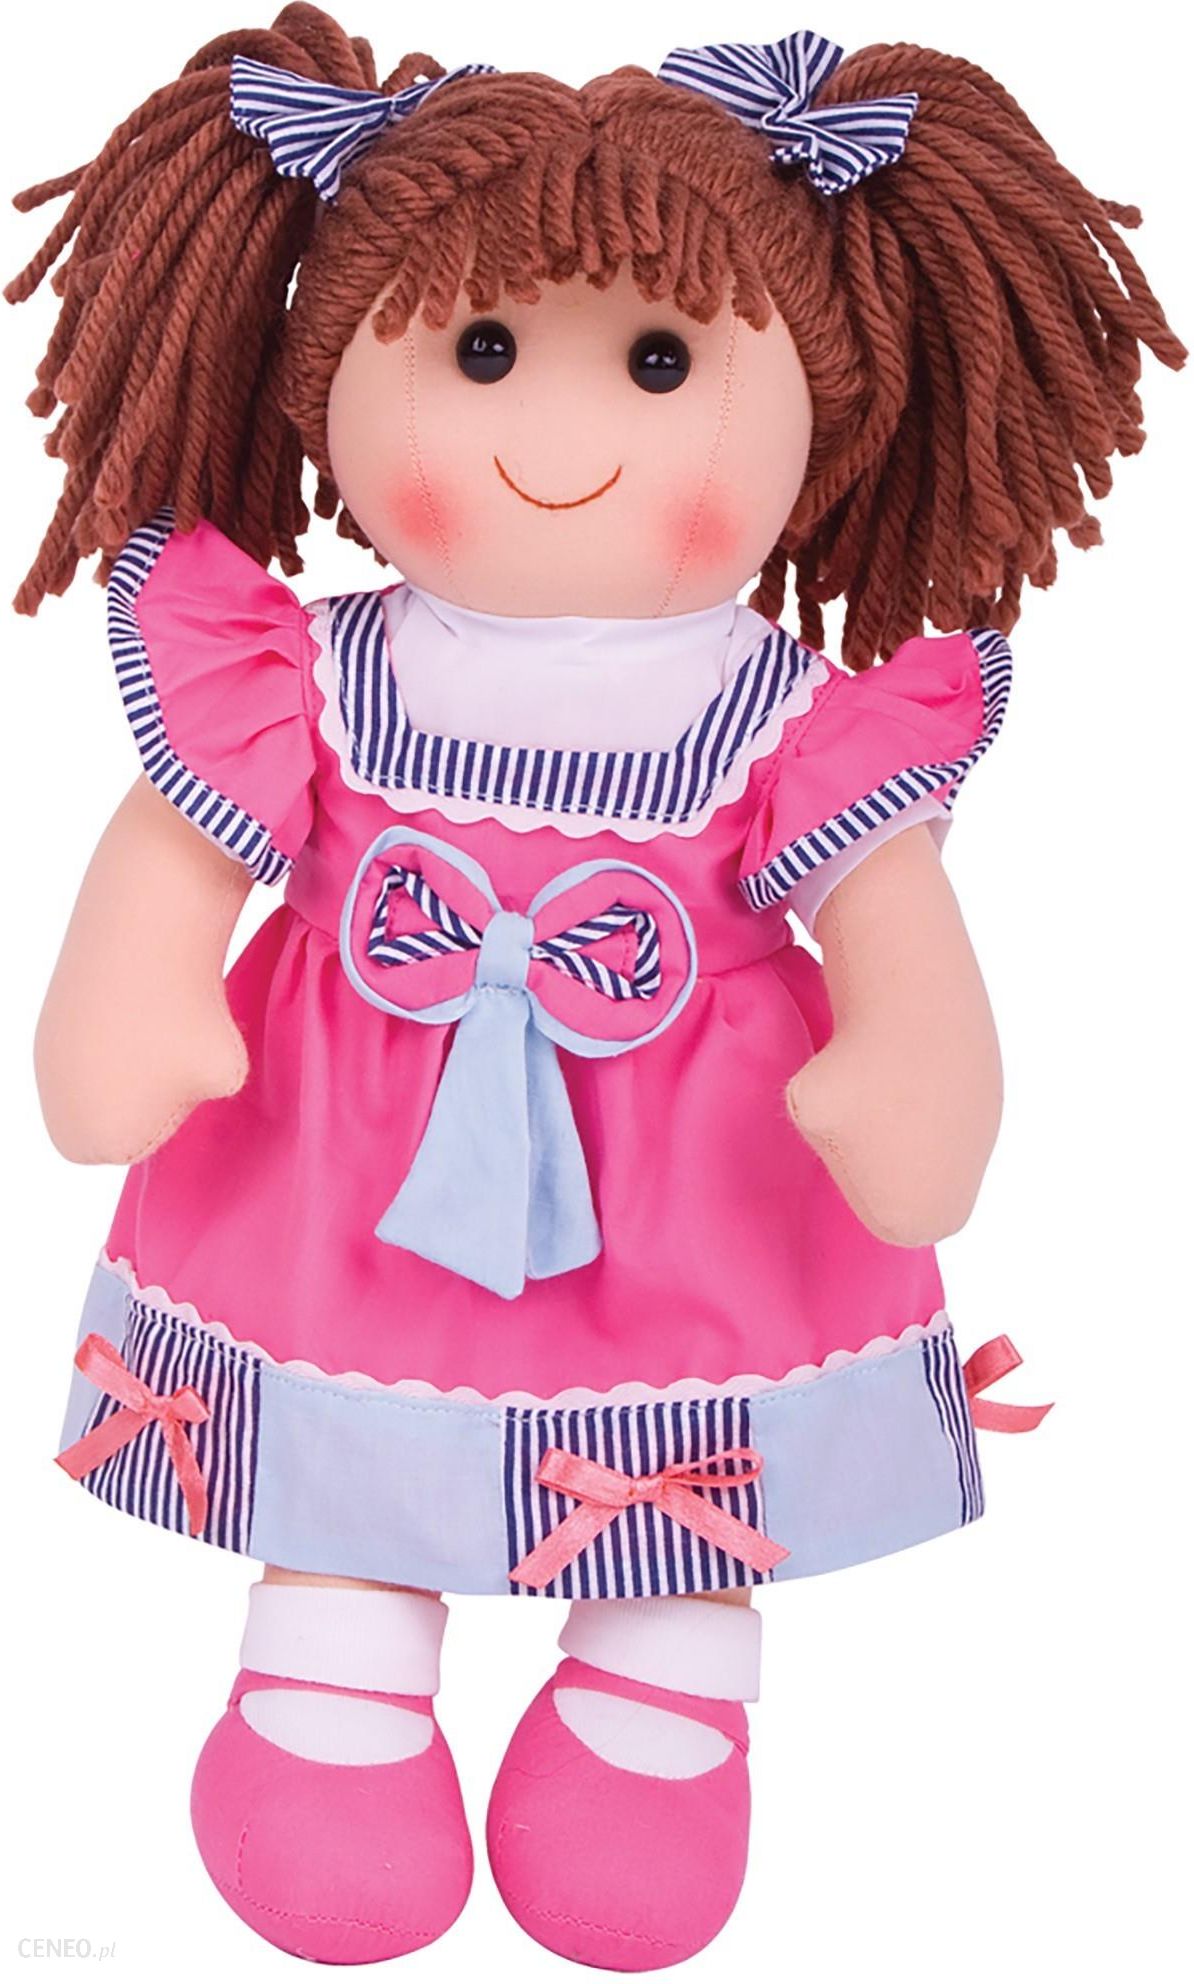 Подарок игрушка кукла. Мягкая кукла. Тряпичная кукла. Мягкая кукла для девочек. Тряпичная кукла игрушка.